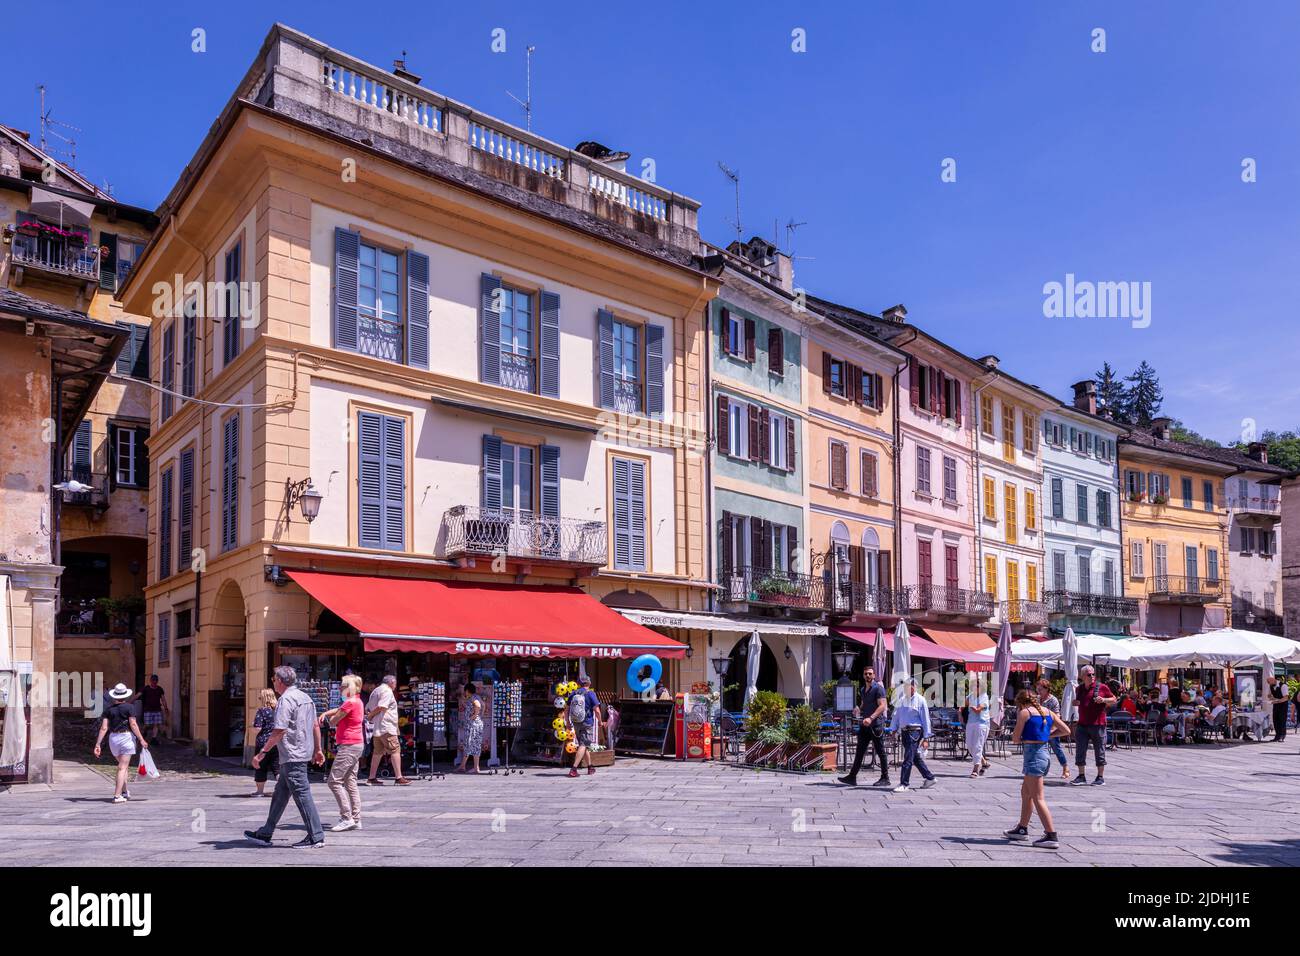 The old town of Orta San Giulio, Piedmont, Italy Stock Photo